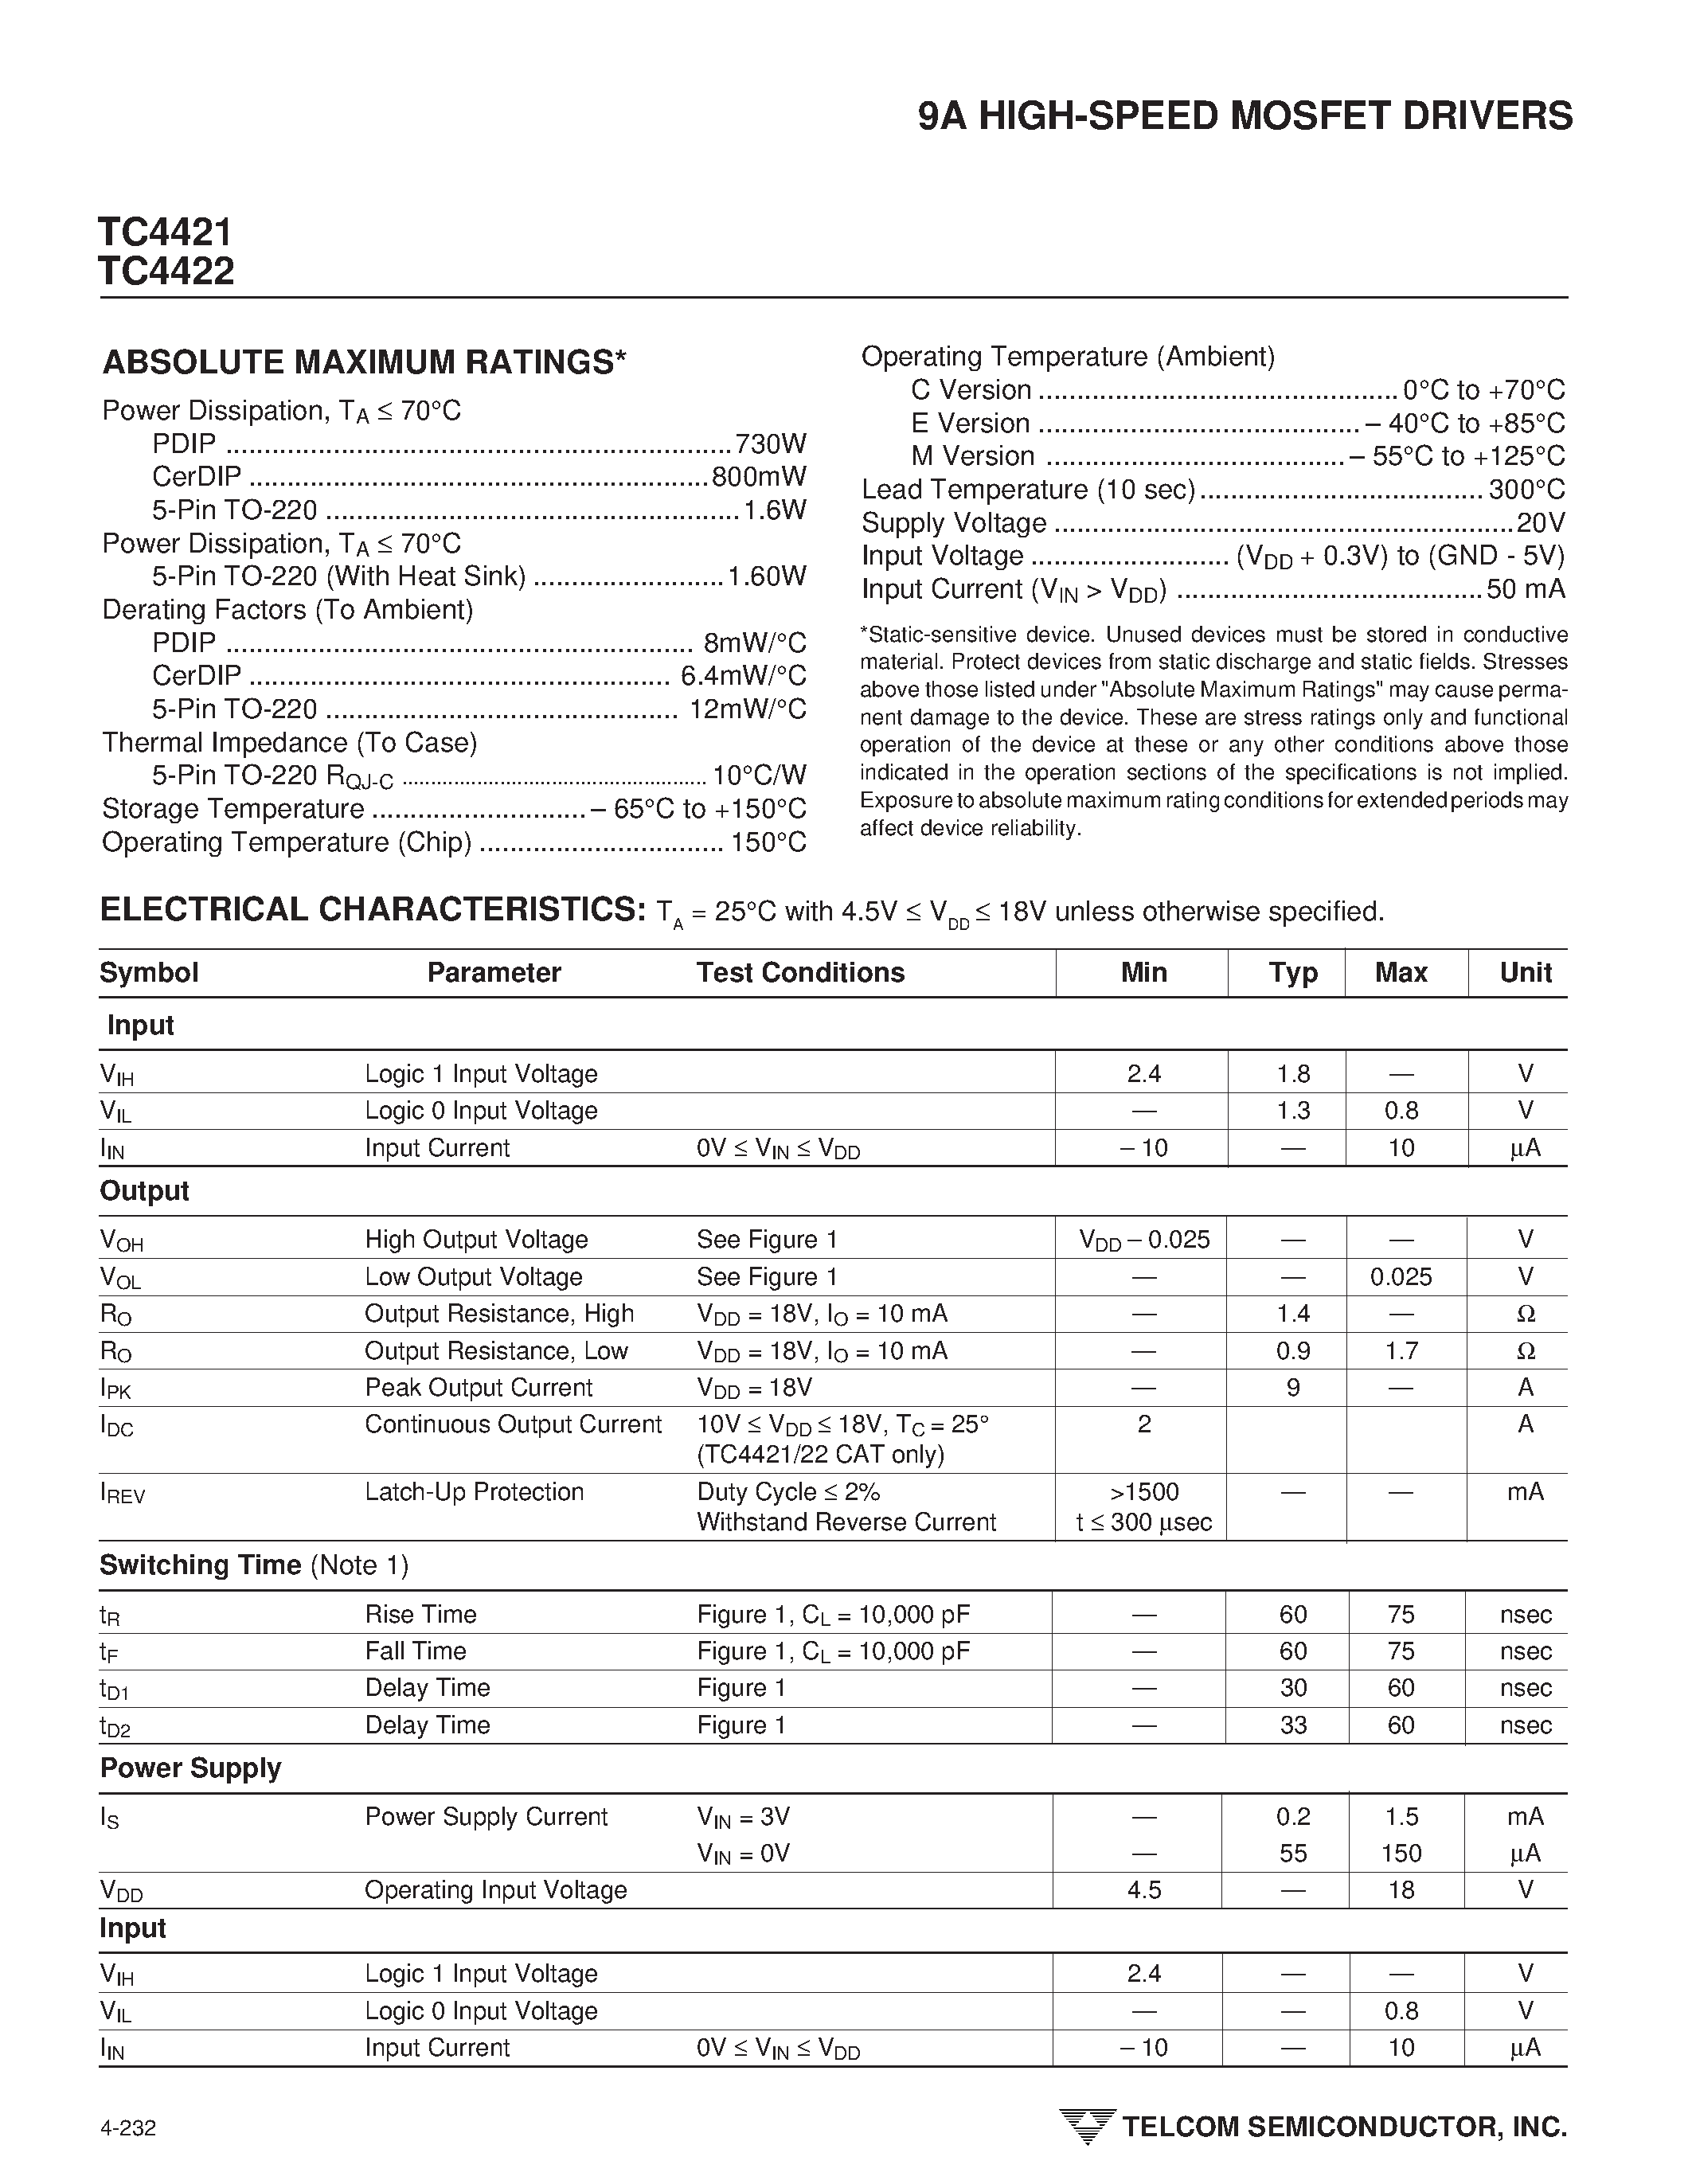 Даташит TC4421 - (TC4421 / TC4422) 9A HIGH-SPEED MOSFET DRIVERS страница 2